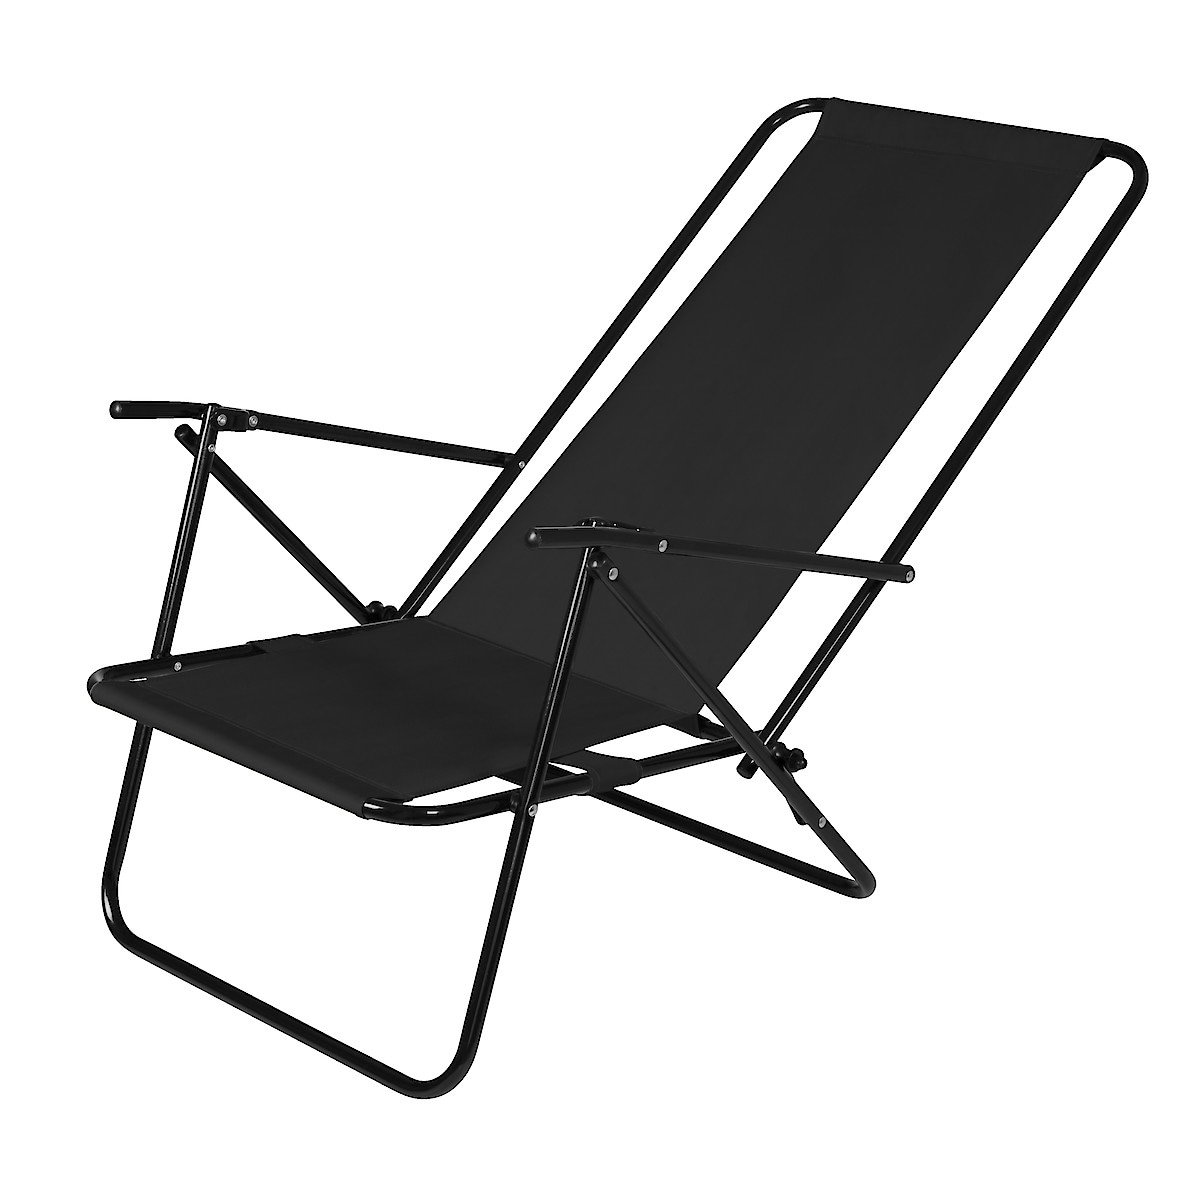 Creatice Clas Ohlson Beach Chair for Living room